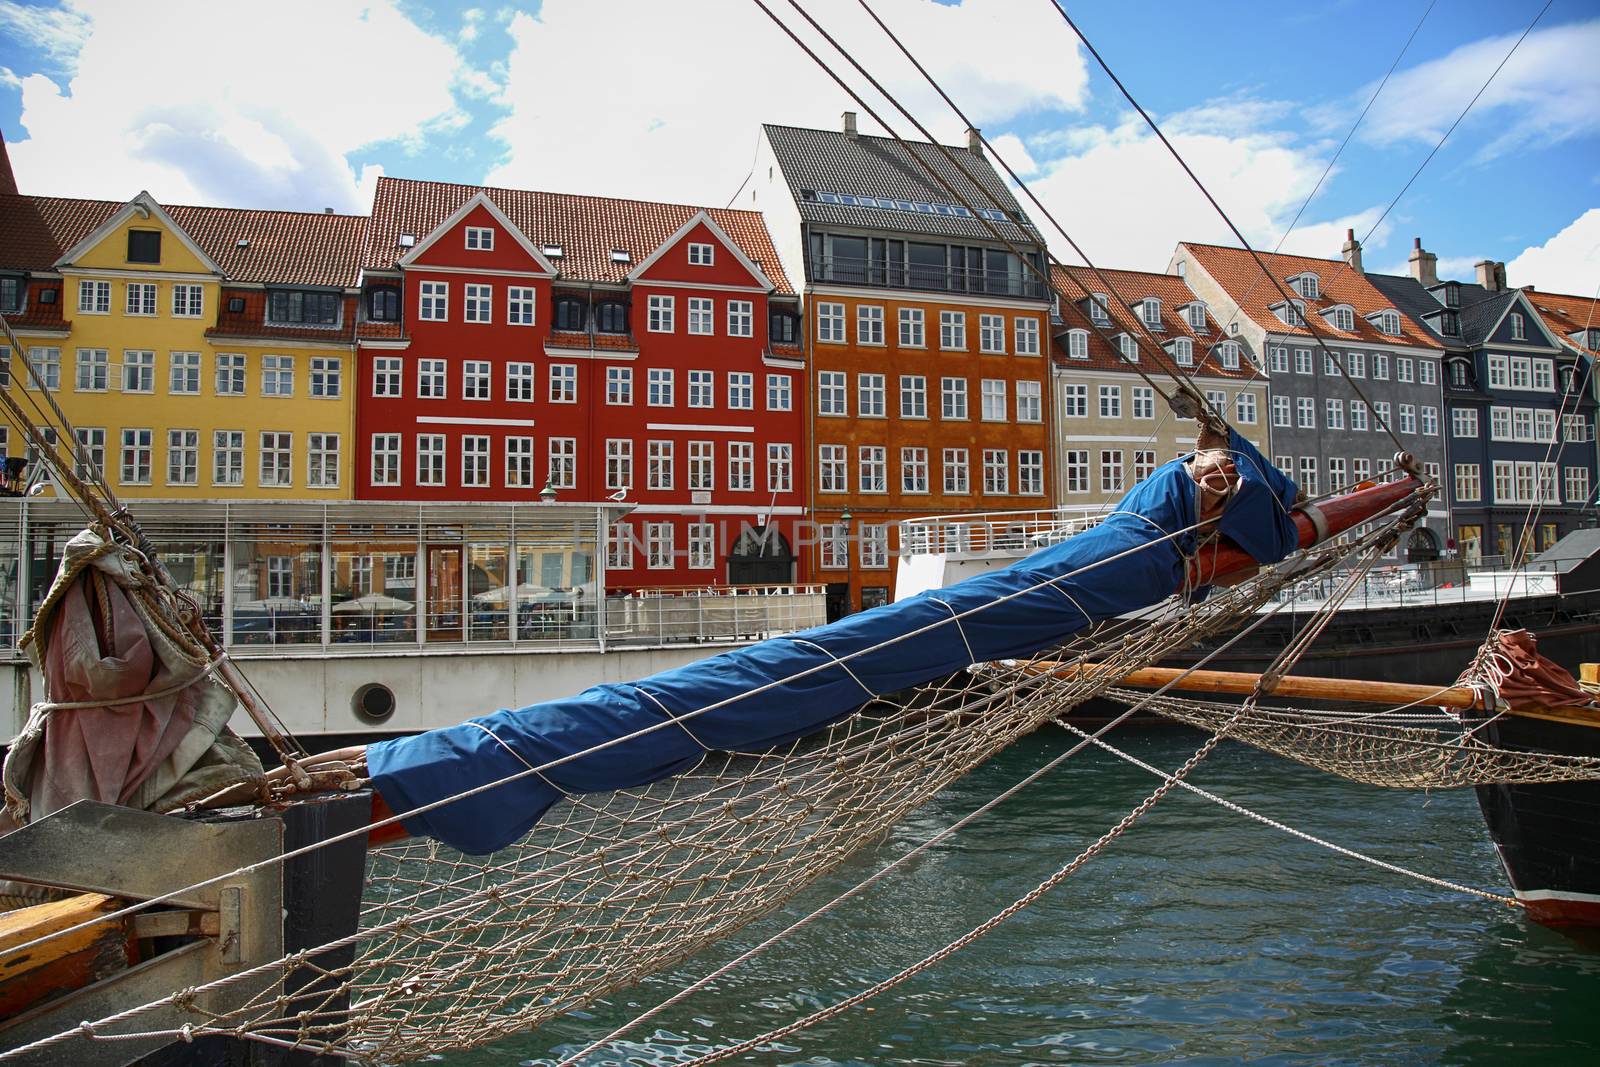 Yacht and color houses in seafront Nyhavn (new Harbor) in Copenhagen, Denmark